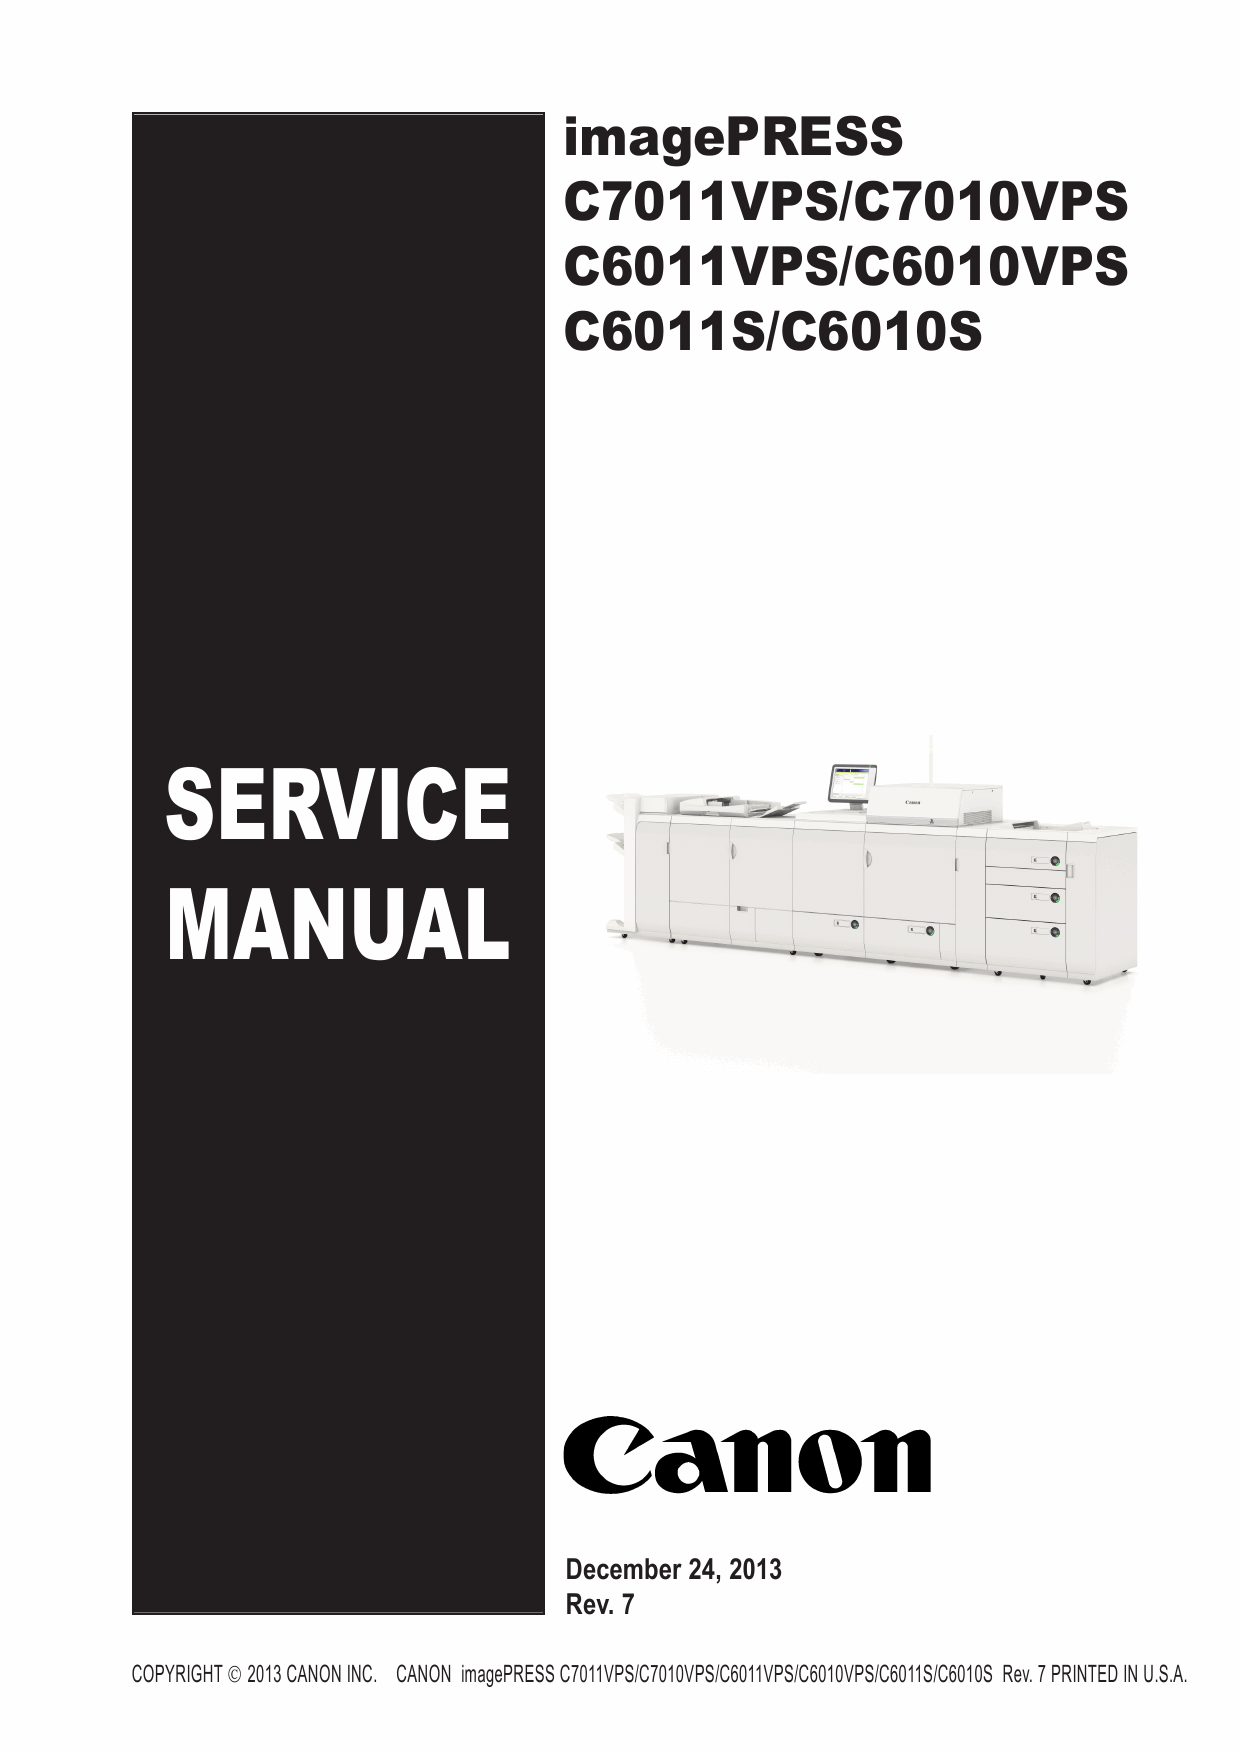 CANON imagePRESS C7011VPS C7010VPS C6011VPS C6010VPS C6011S C6010S Service Manual PDF download-1